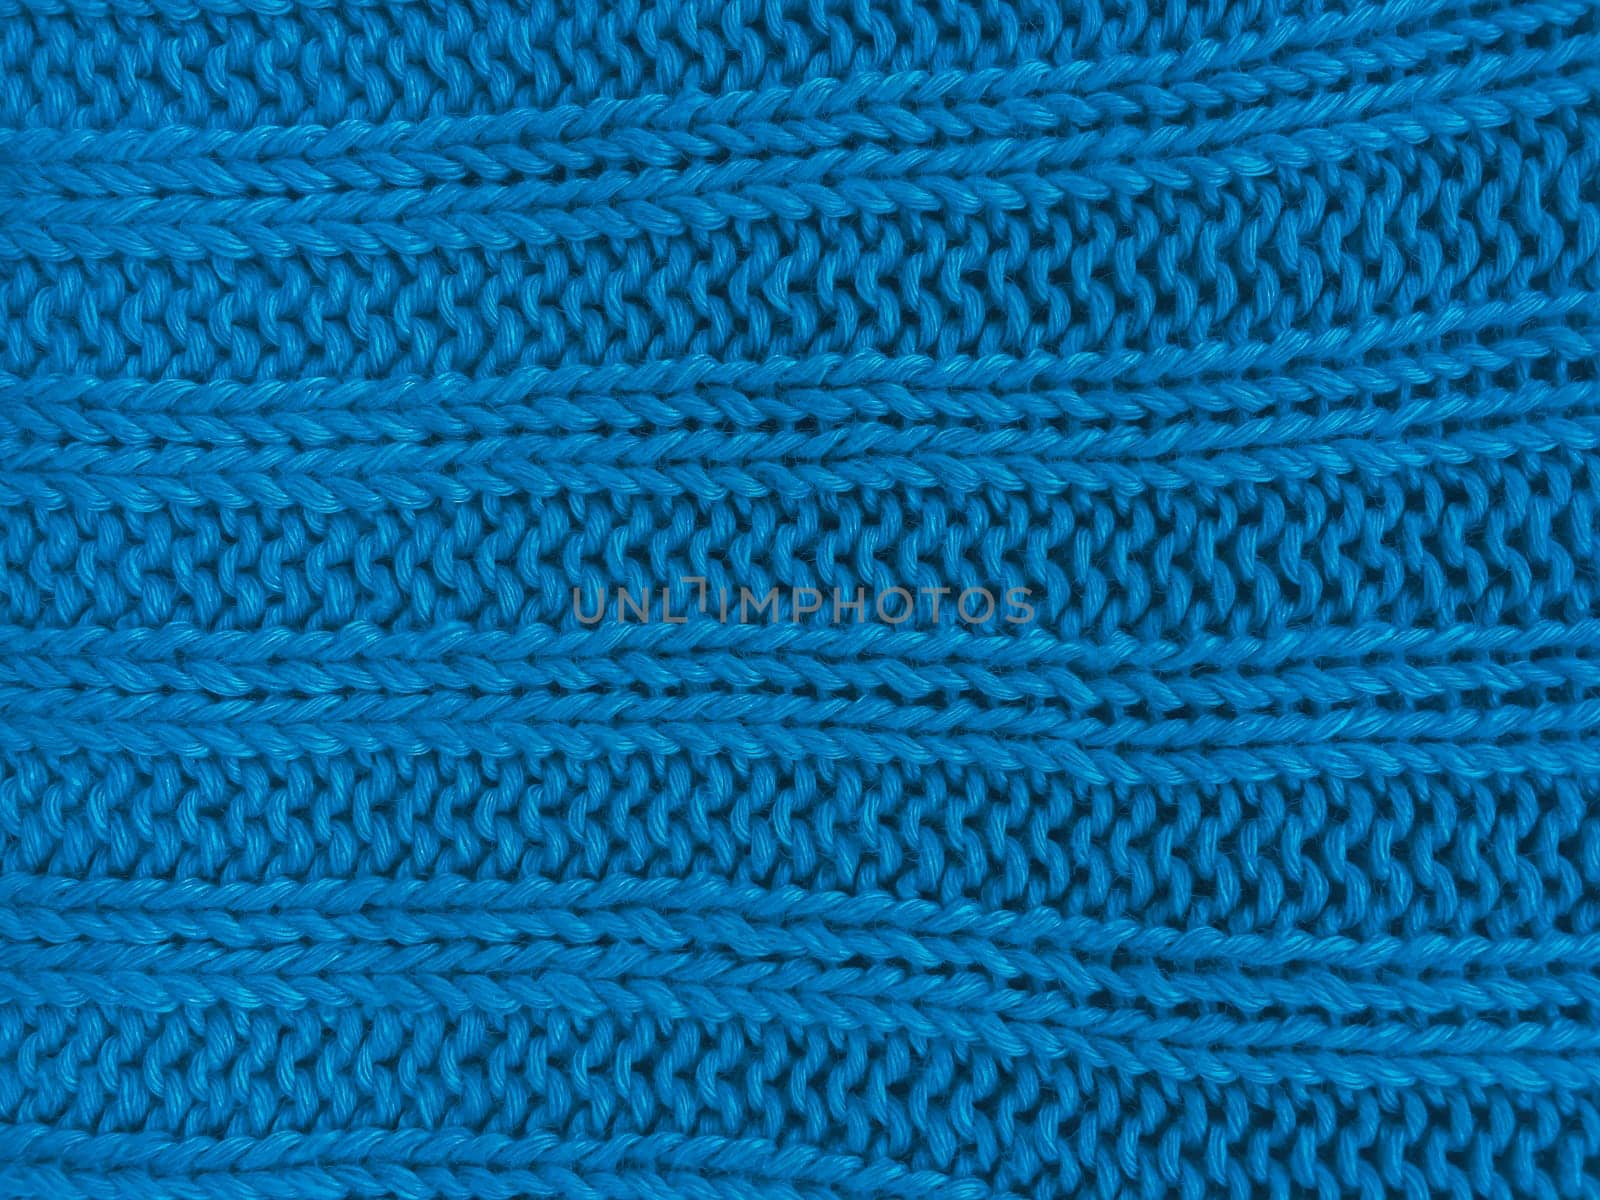 Winter Knit Pattern. Warm Woven Sweater. Knitwear Soft Background. Wool Knit Closeup. Scandinavian Weave Material. Vintage Cotton Thread. Organic Handmade Canvas. Winter Knit Pattern.